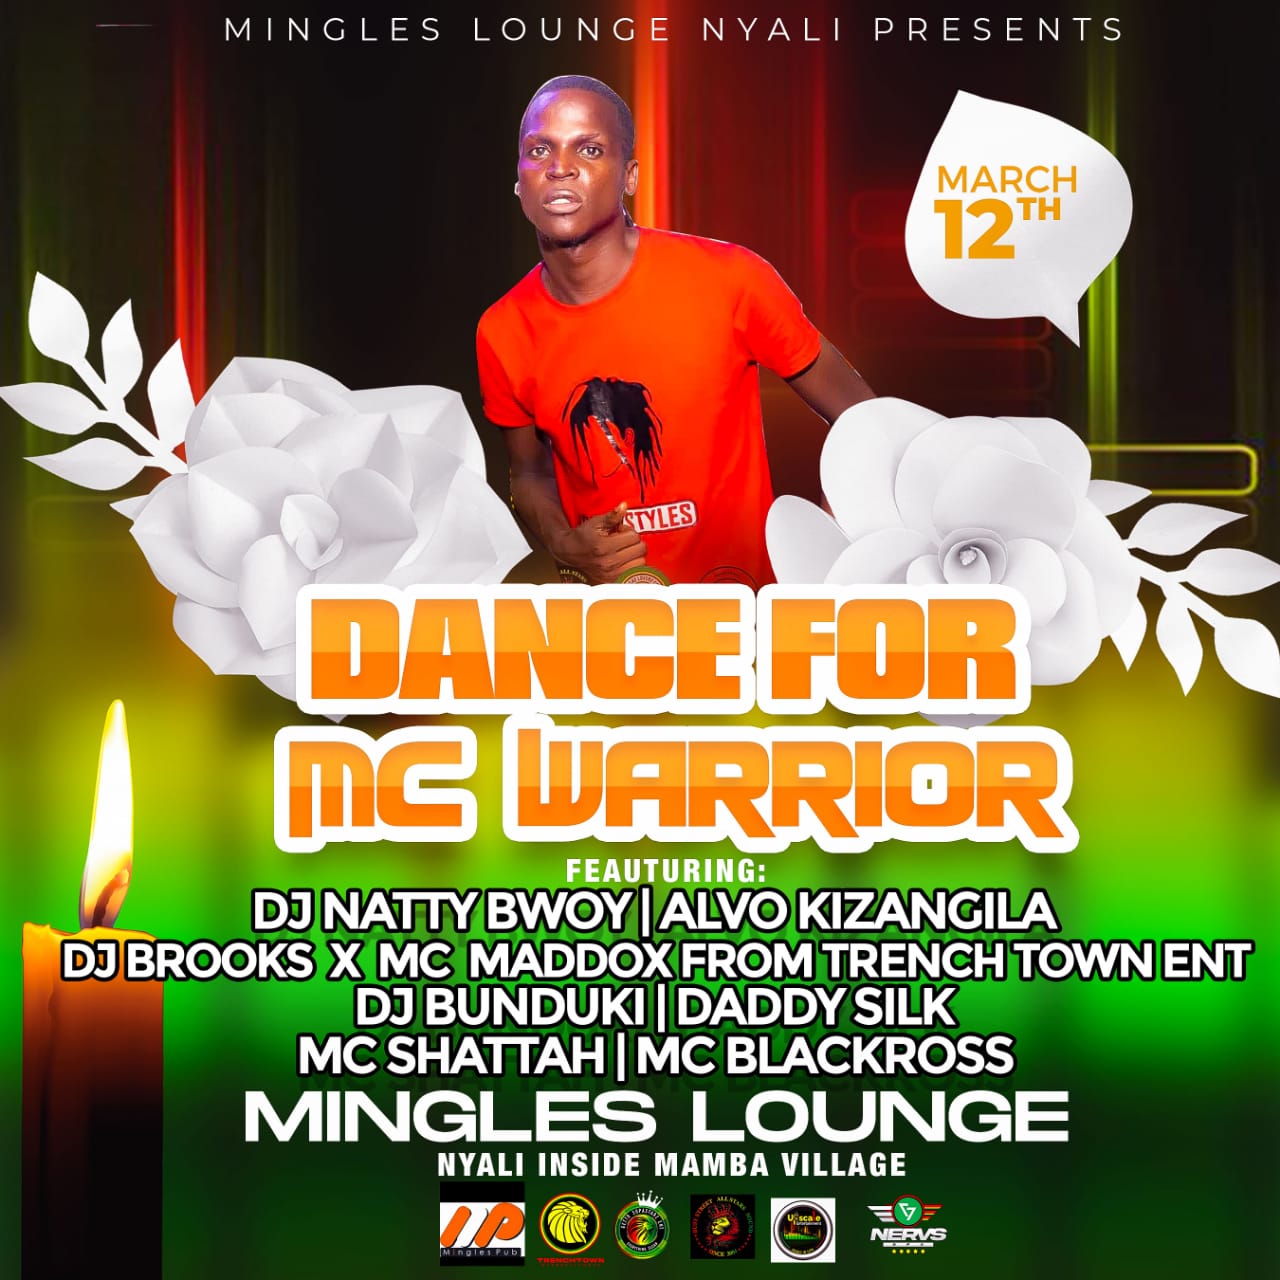 DANCE FOR MC WARRIOR At MINGLE LOUNGE NYALI